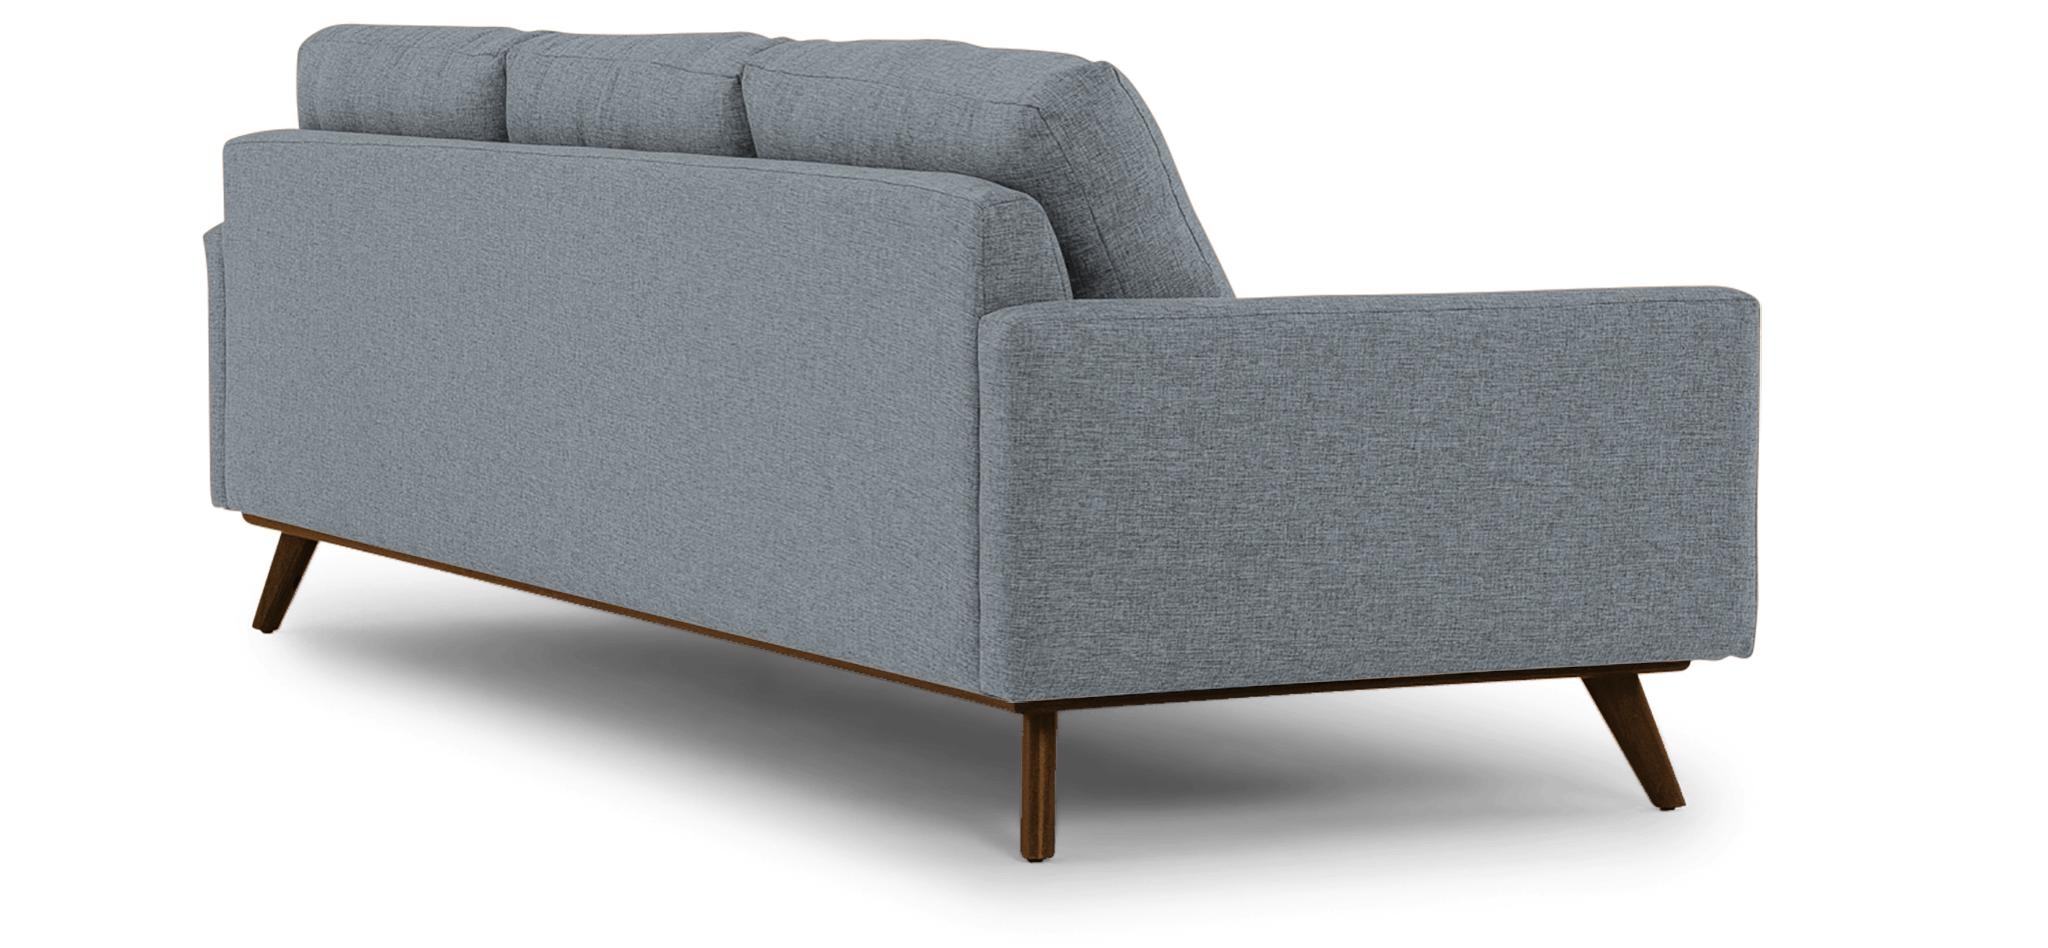 Gray Hopson Mid Century Modern Grand Sofa - Synergy Pewter - Mocha - Image 3